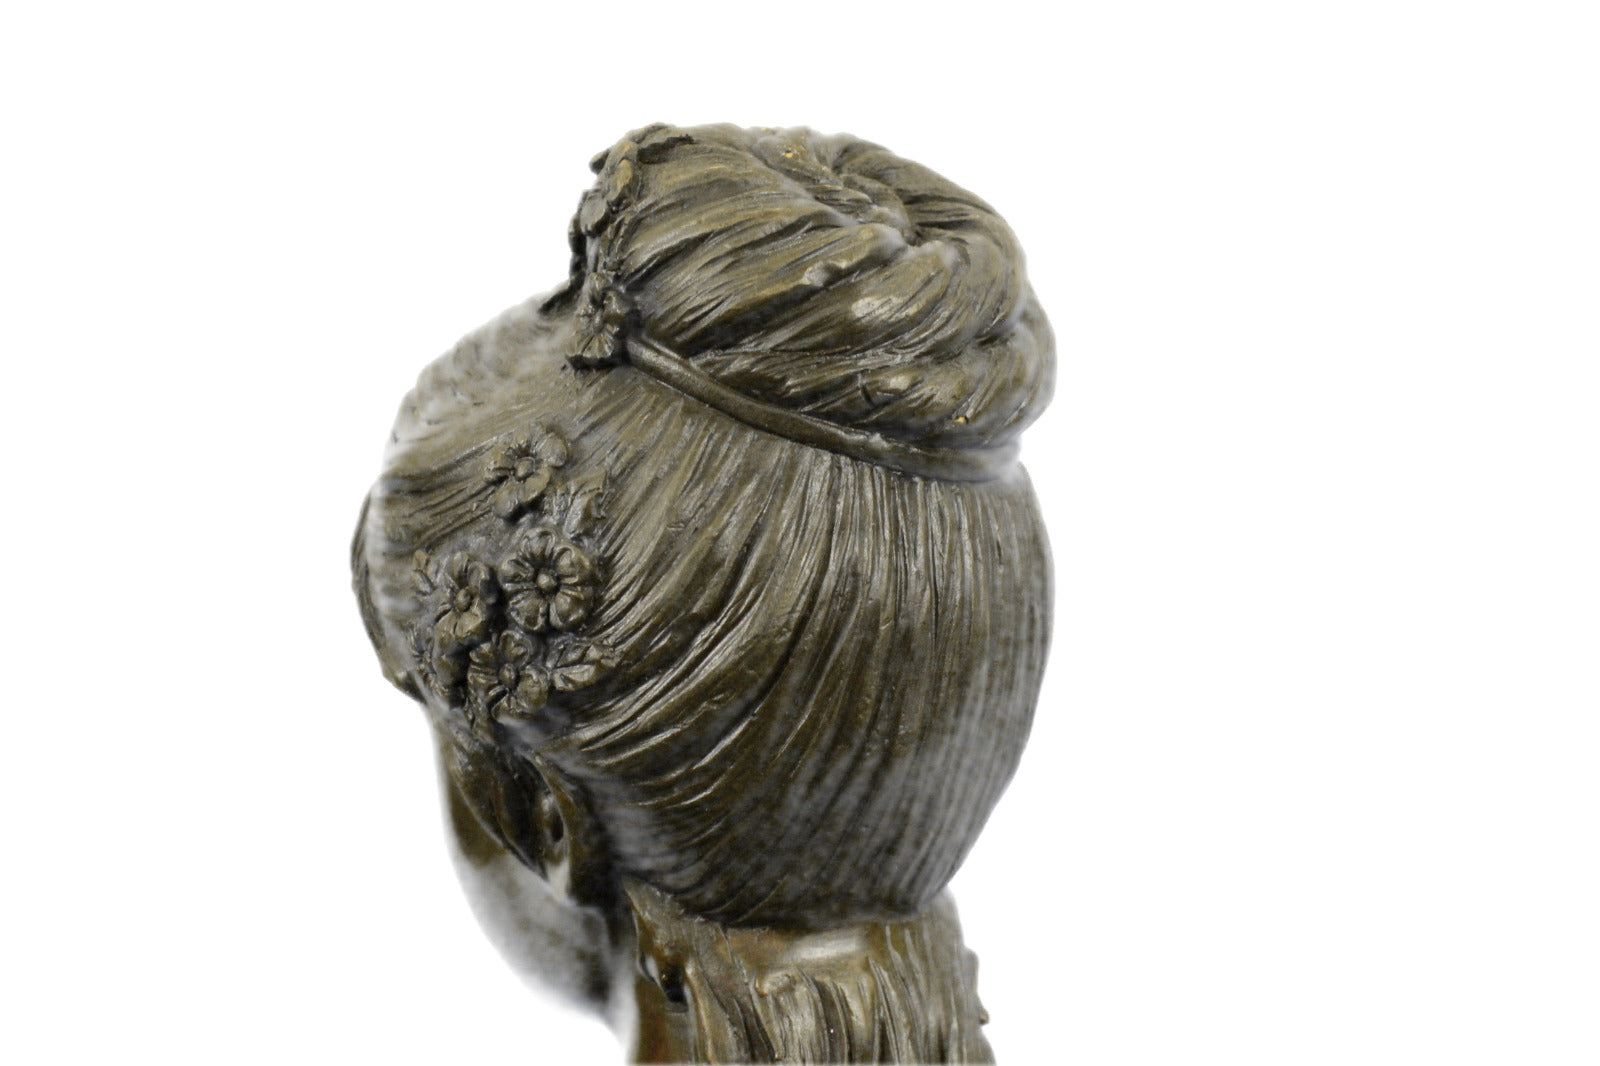 Grecian Goddess Classic Beauty Female Bust Bronze Marble Statue Sculpture Gift